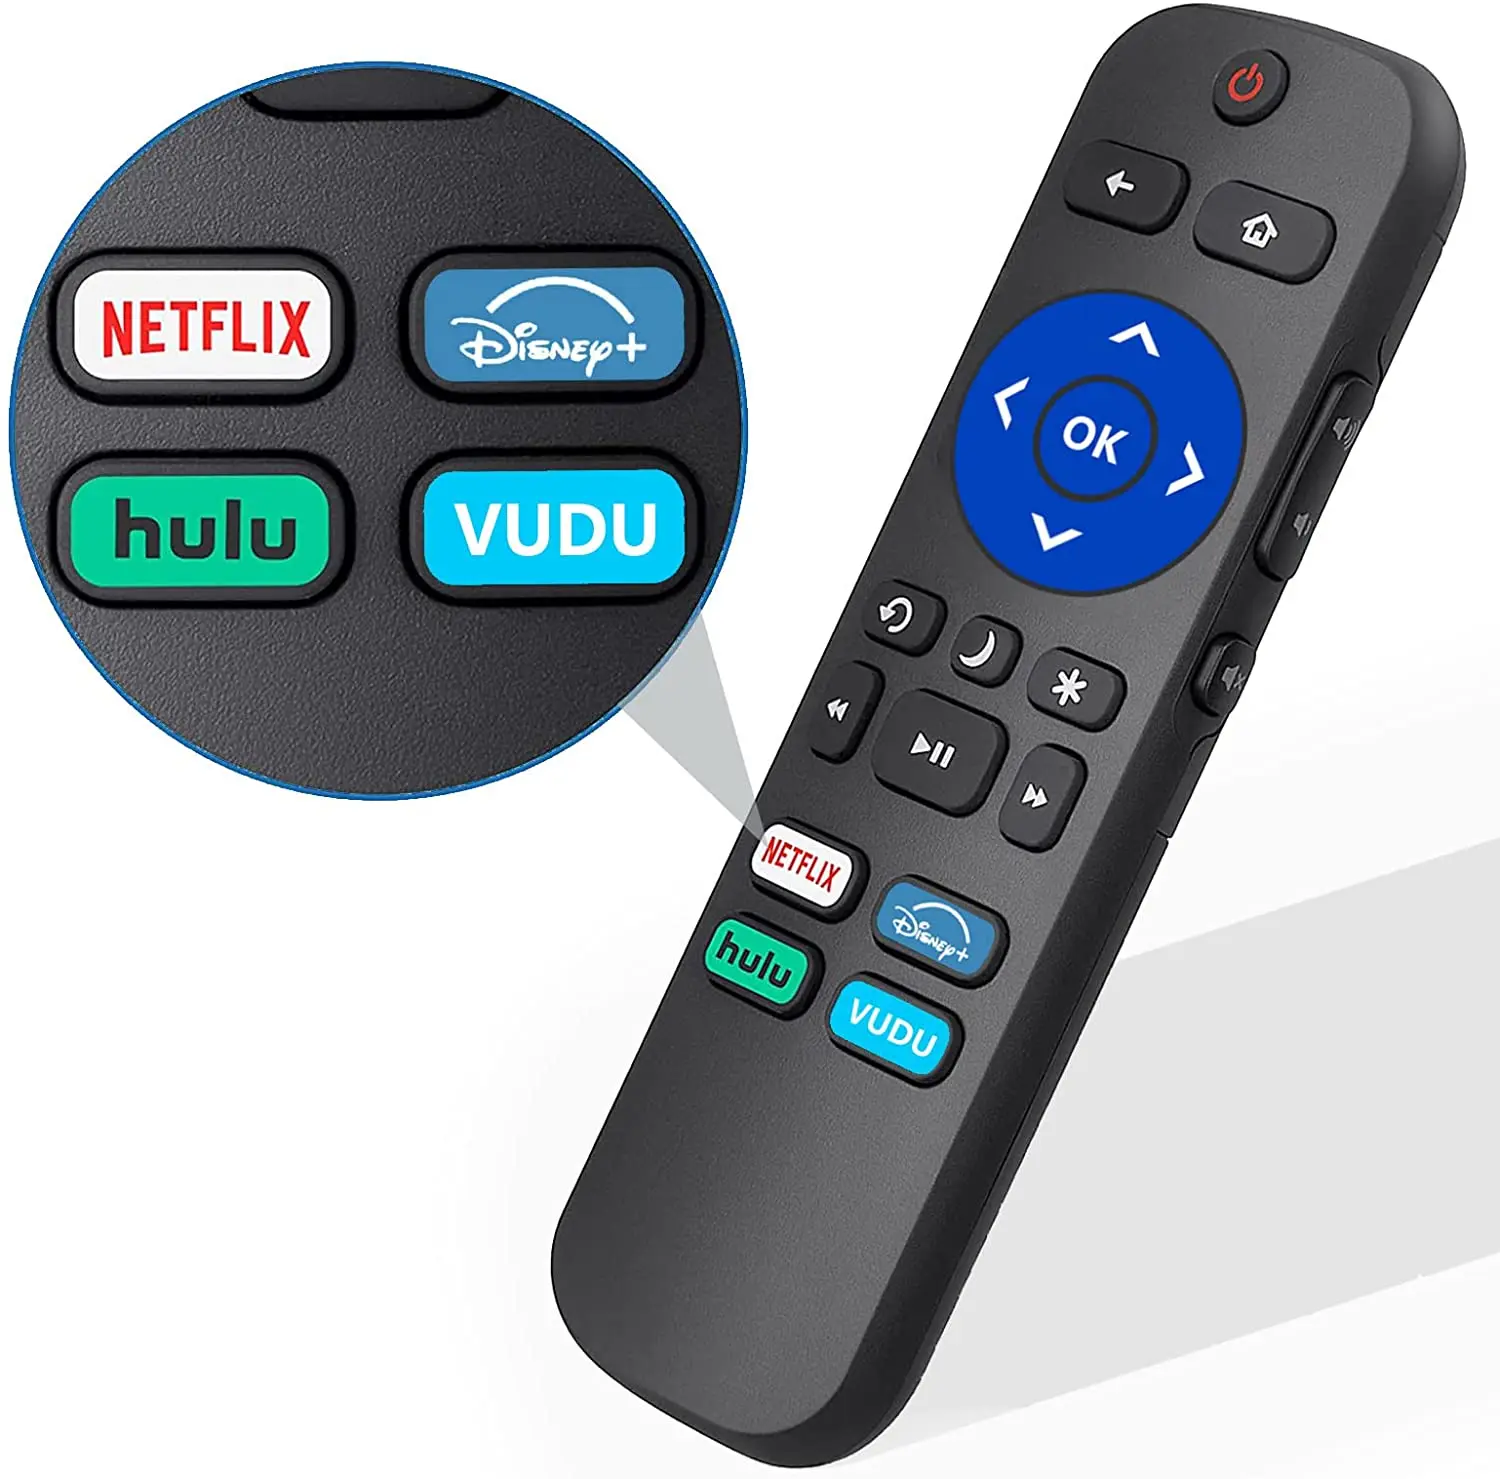 Mando a distancia Universal para Sony Jvc onn-phillips Hisense TCL Sharp Roku TV integrada con Netflix Disney + Hulu VUDU Video